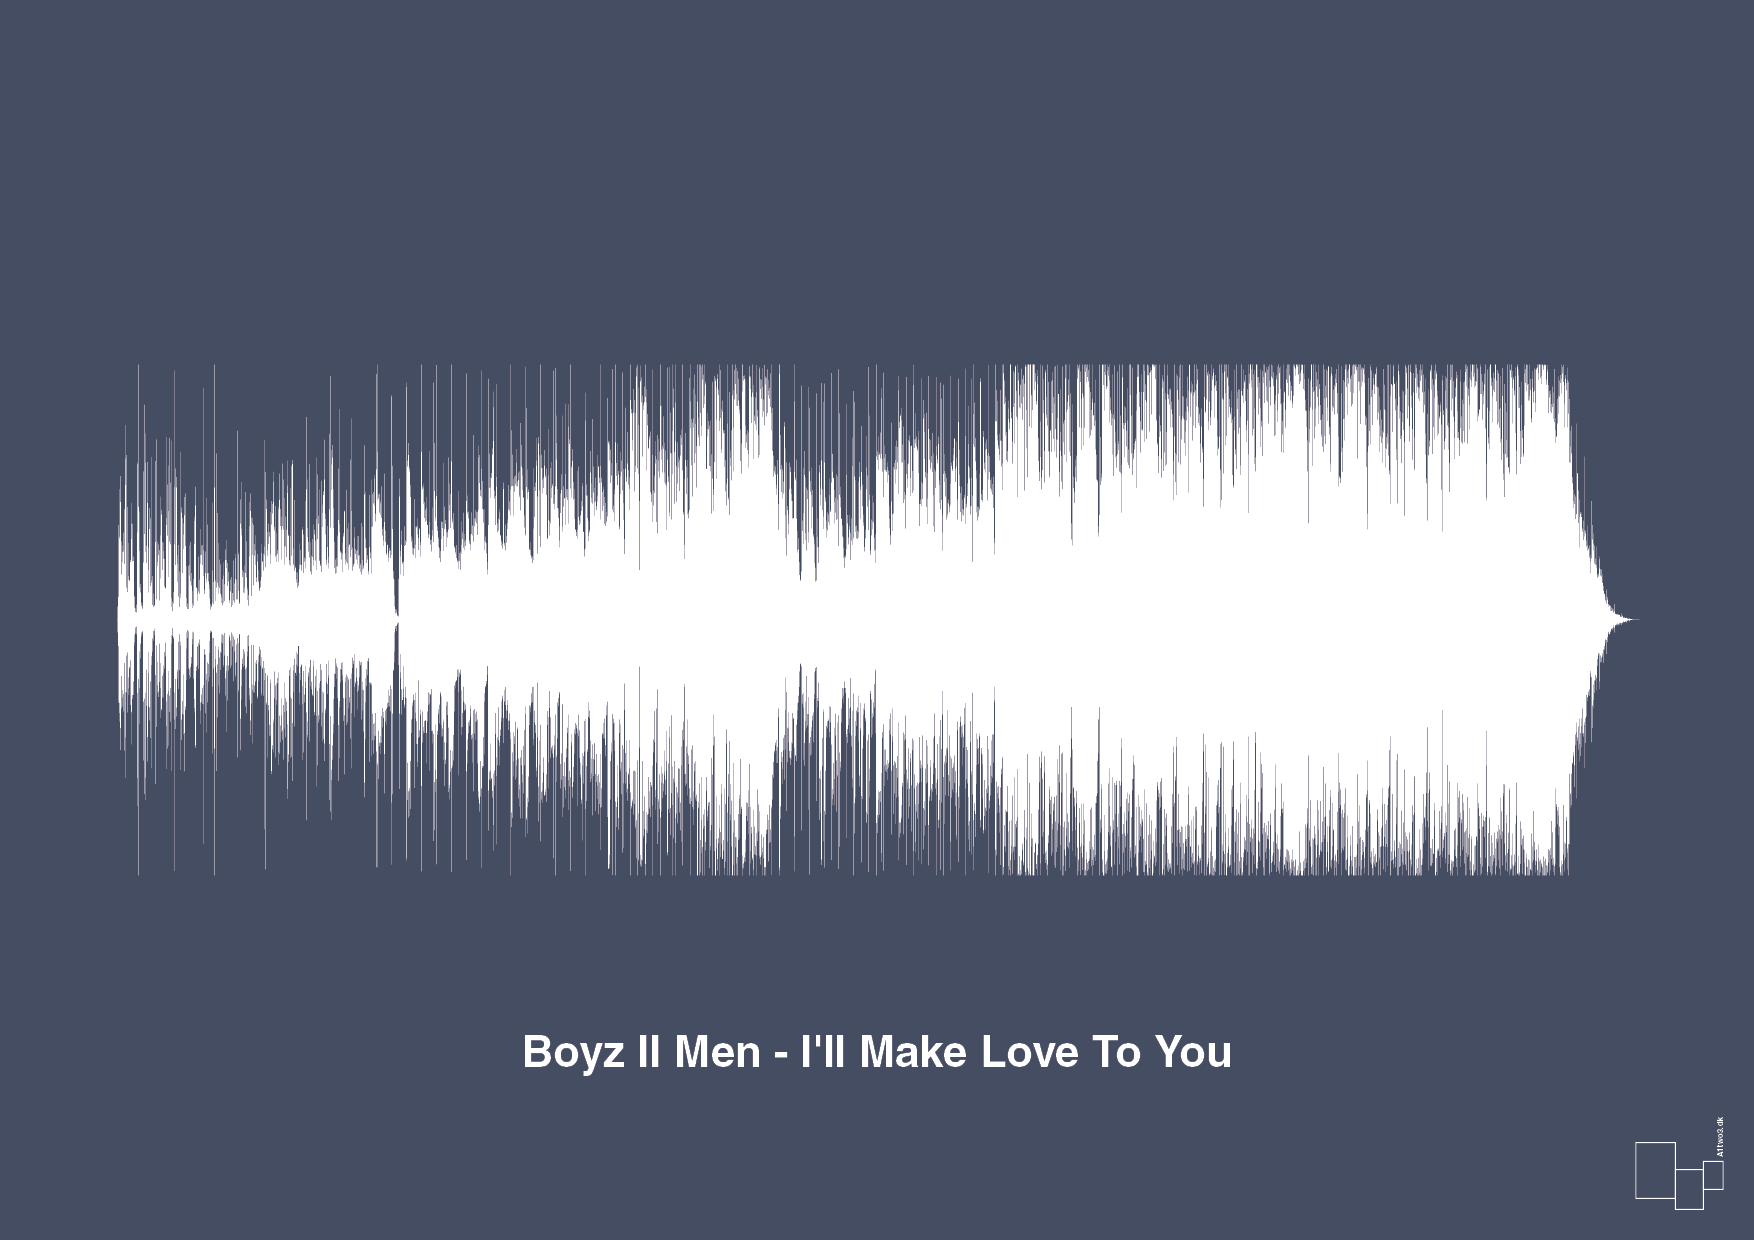 boyz II men - i'll make love to you - Plakat med Musik i Petrol